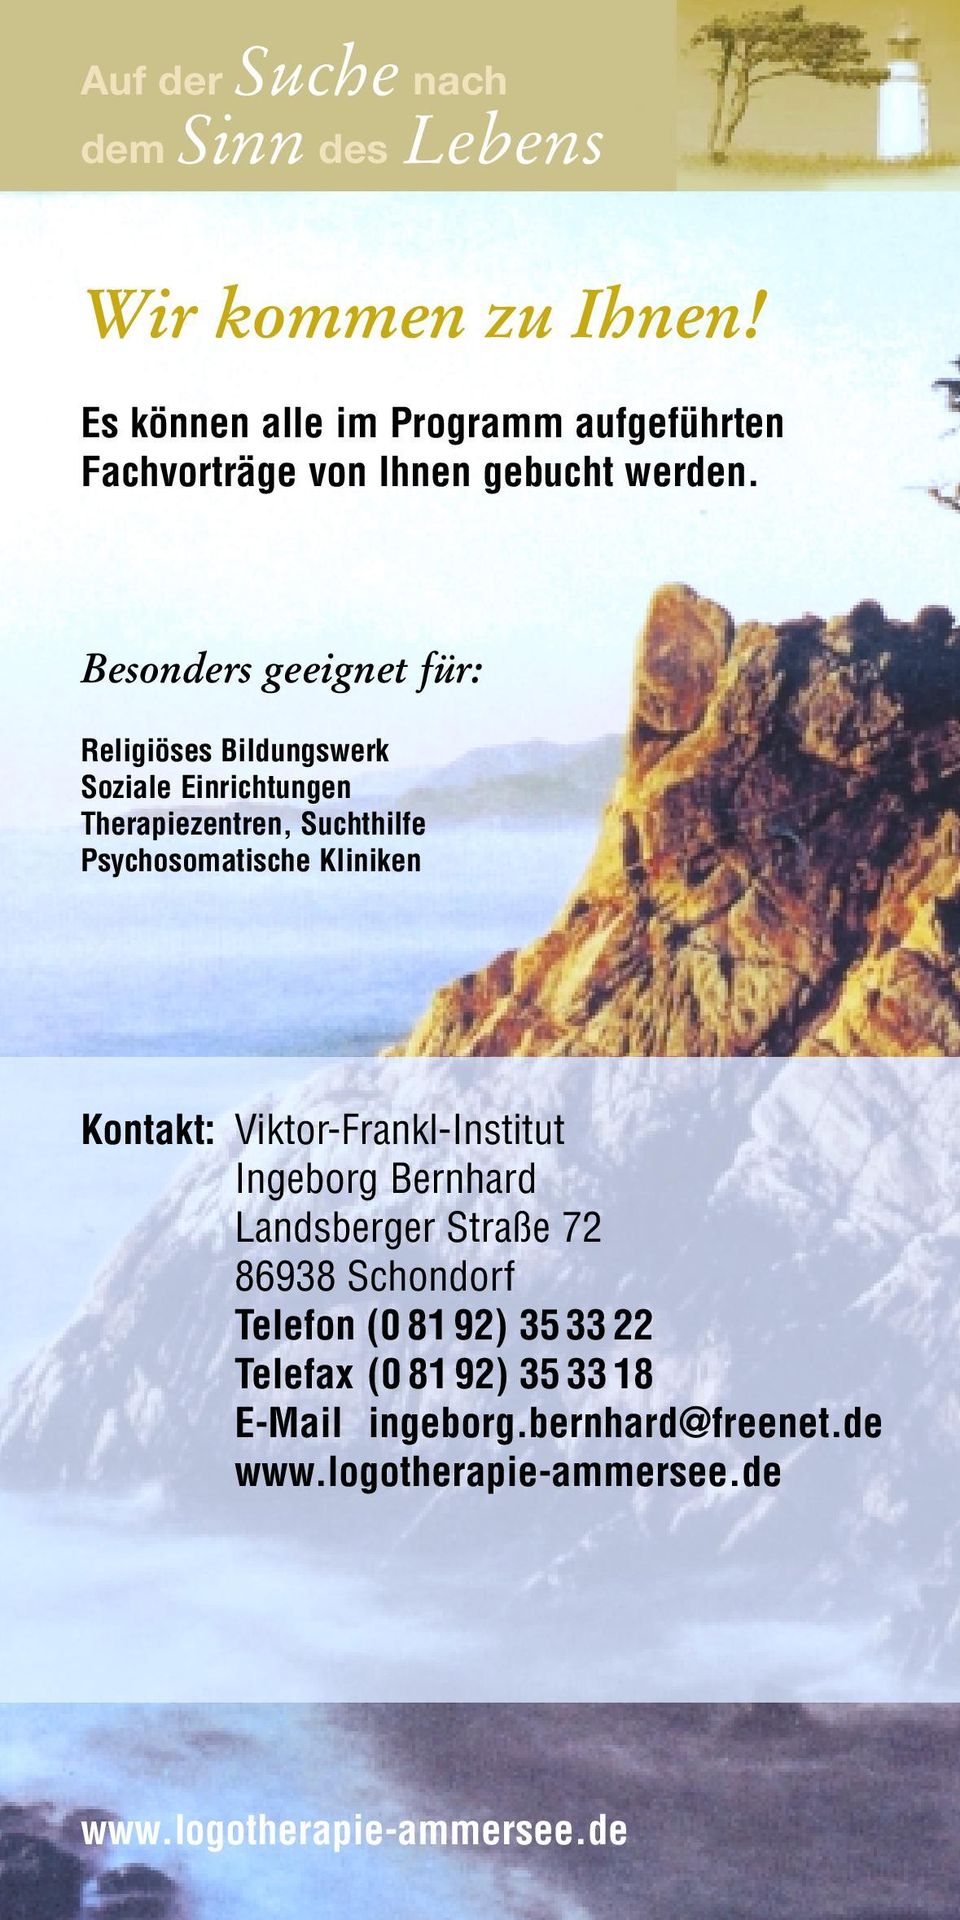 Kliniken Kontakt: Viktor-Frankl-Institut Ingeborg Bernhard Landsberger Straße 72 86938 Schondorf Telefon (0 81 92)